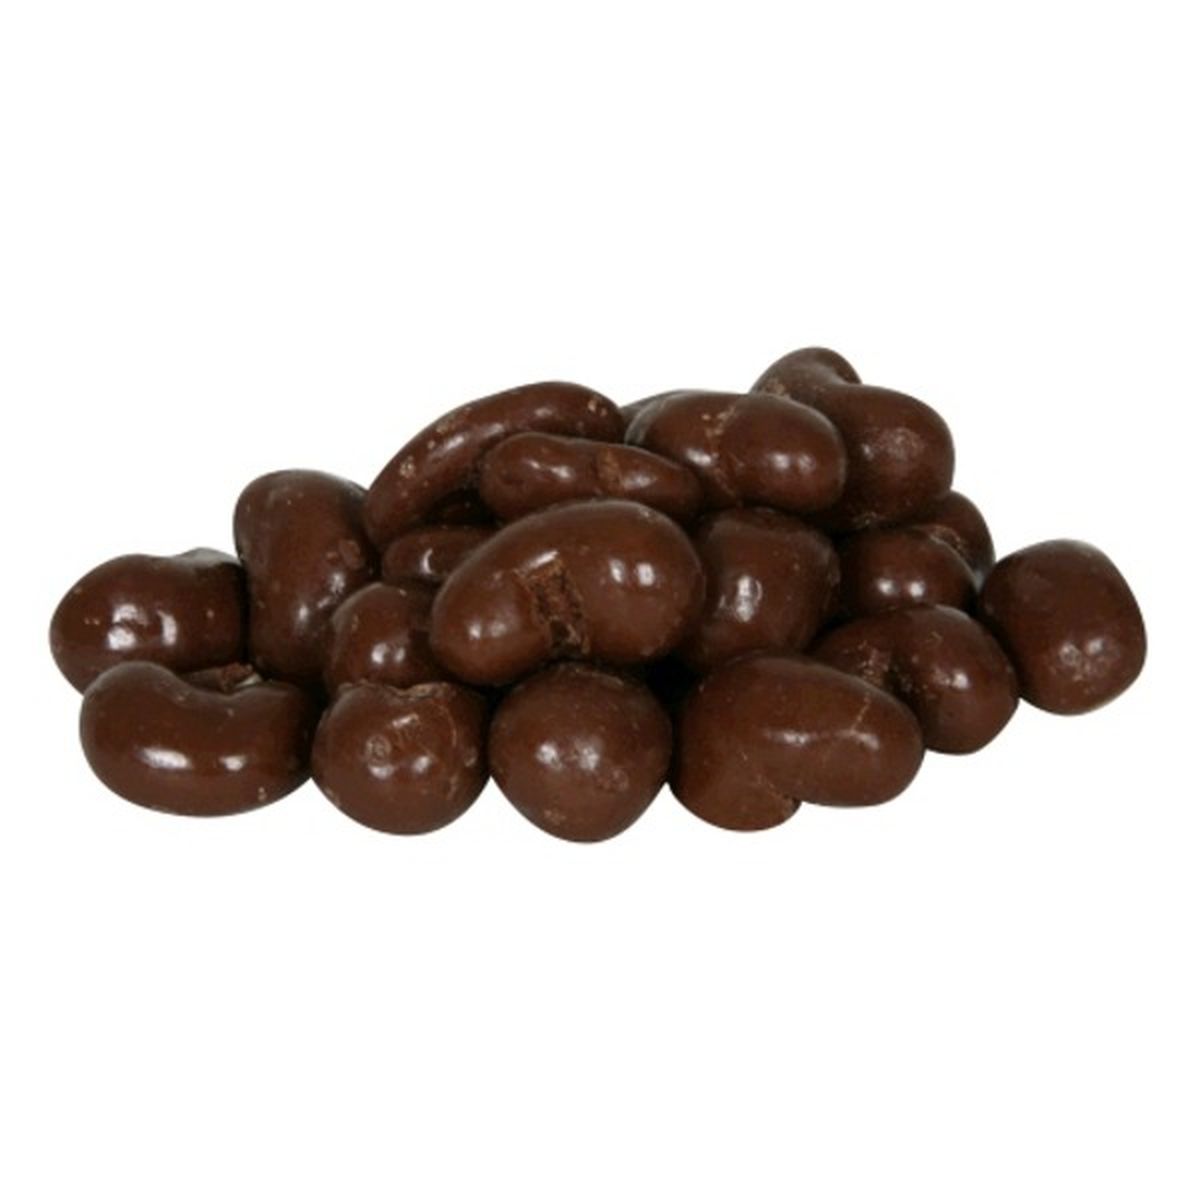 Calories in Wegmans Premium Chocolate Cashews